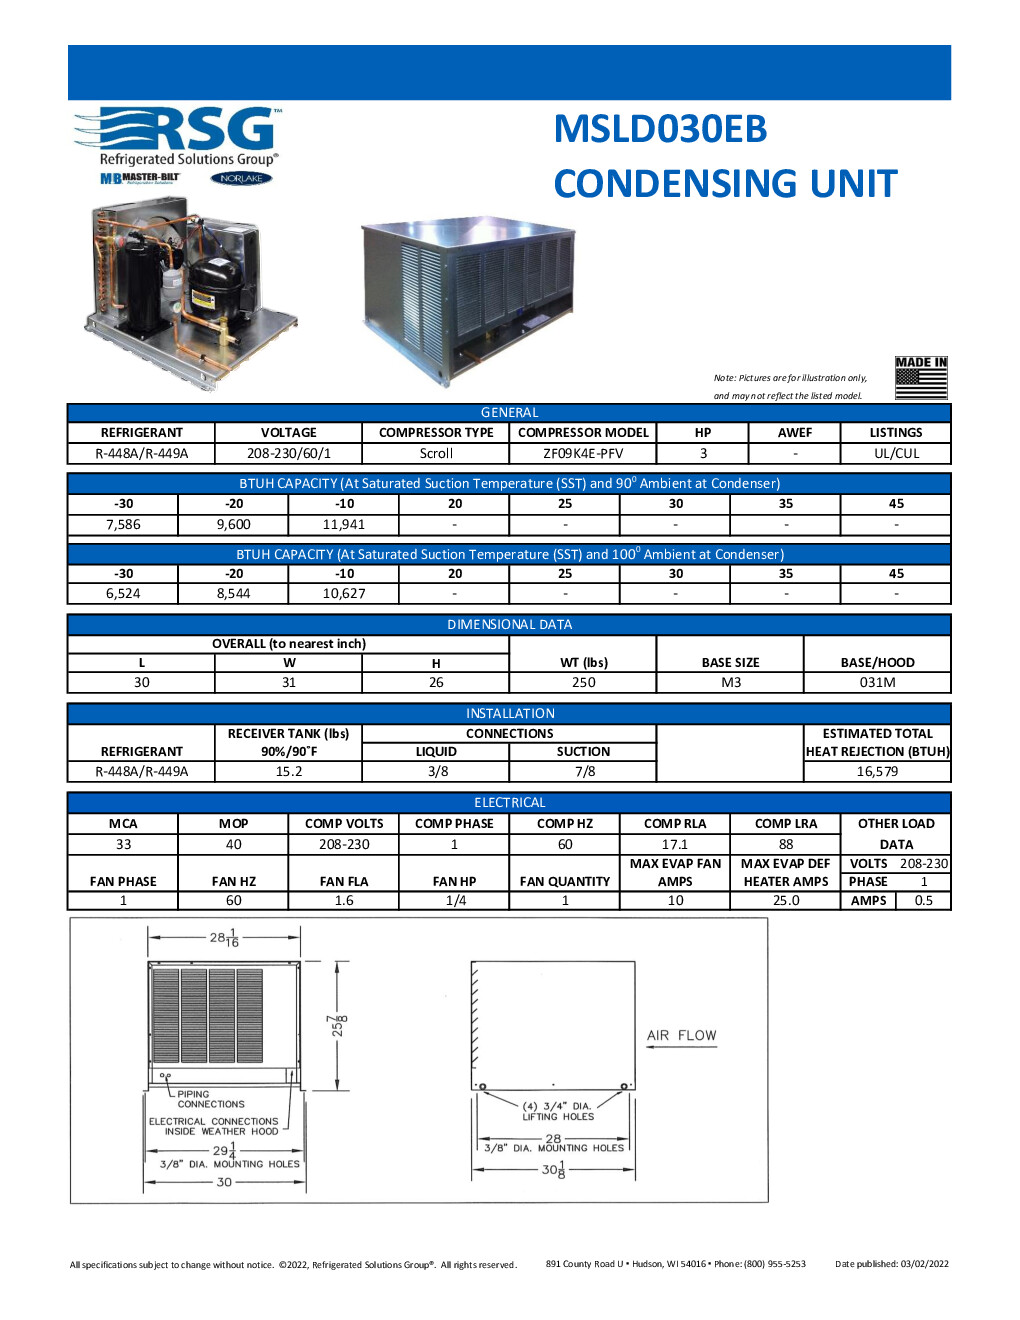 Master-Bilt MSLD030EB Remote Low Temp Scroll Condensing Unit, 3 HP, 208-230v/60/1-ph